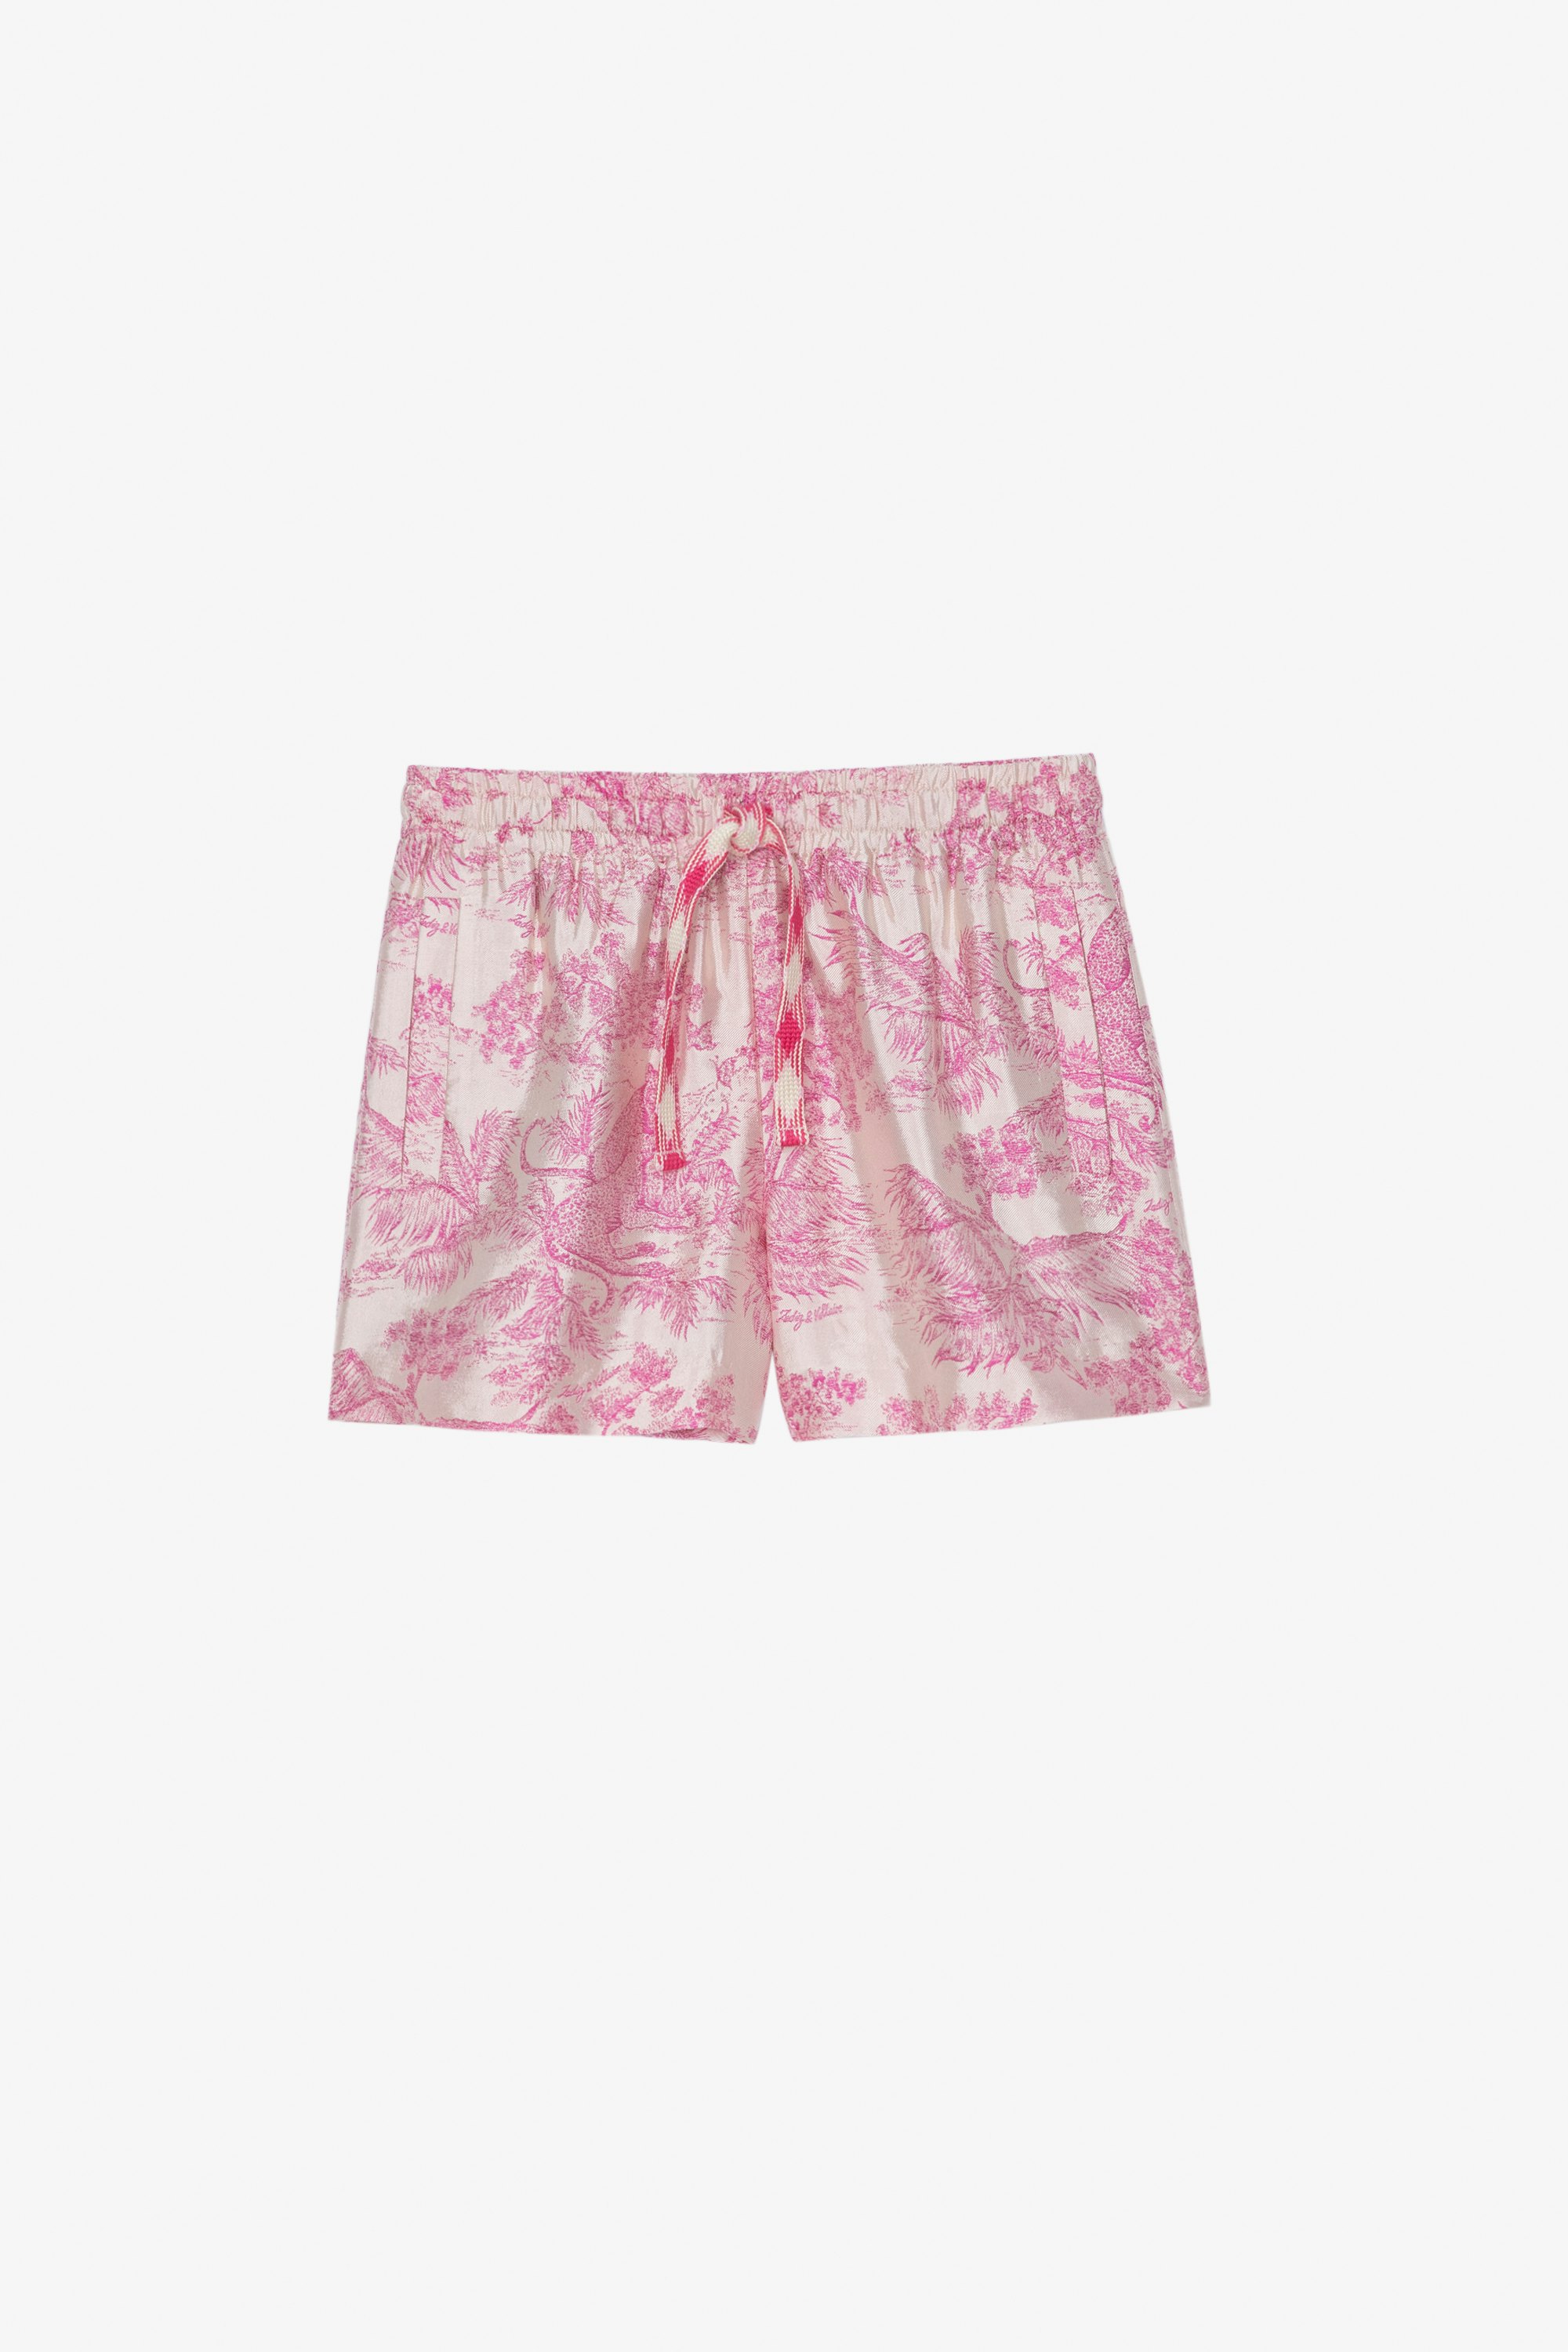 Paxi Shorts Women's pink Toile-de-Jouy jacquard shorts